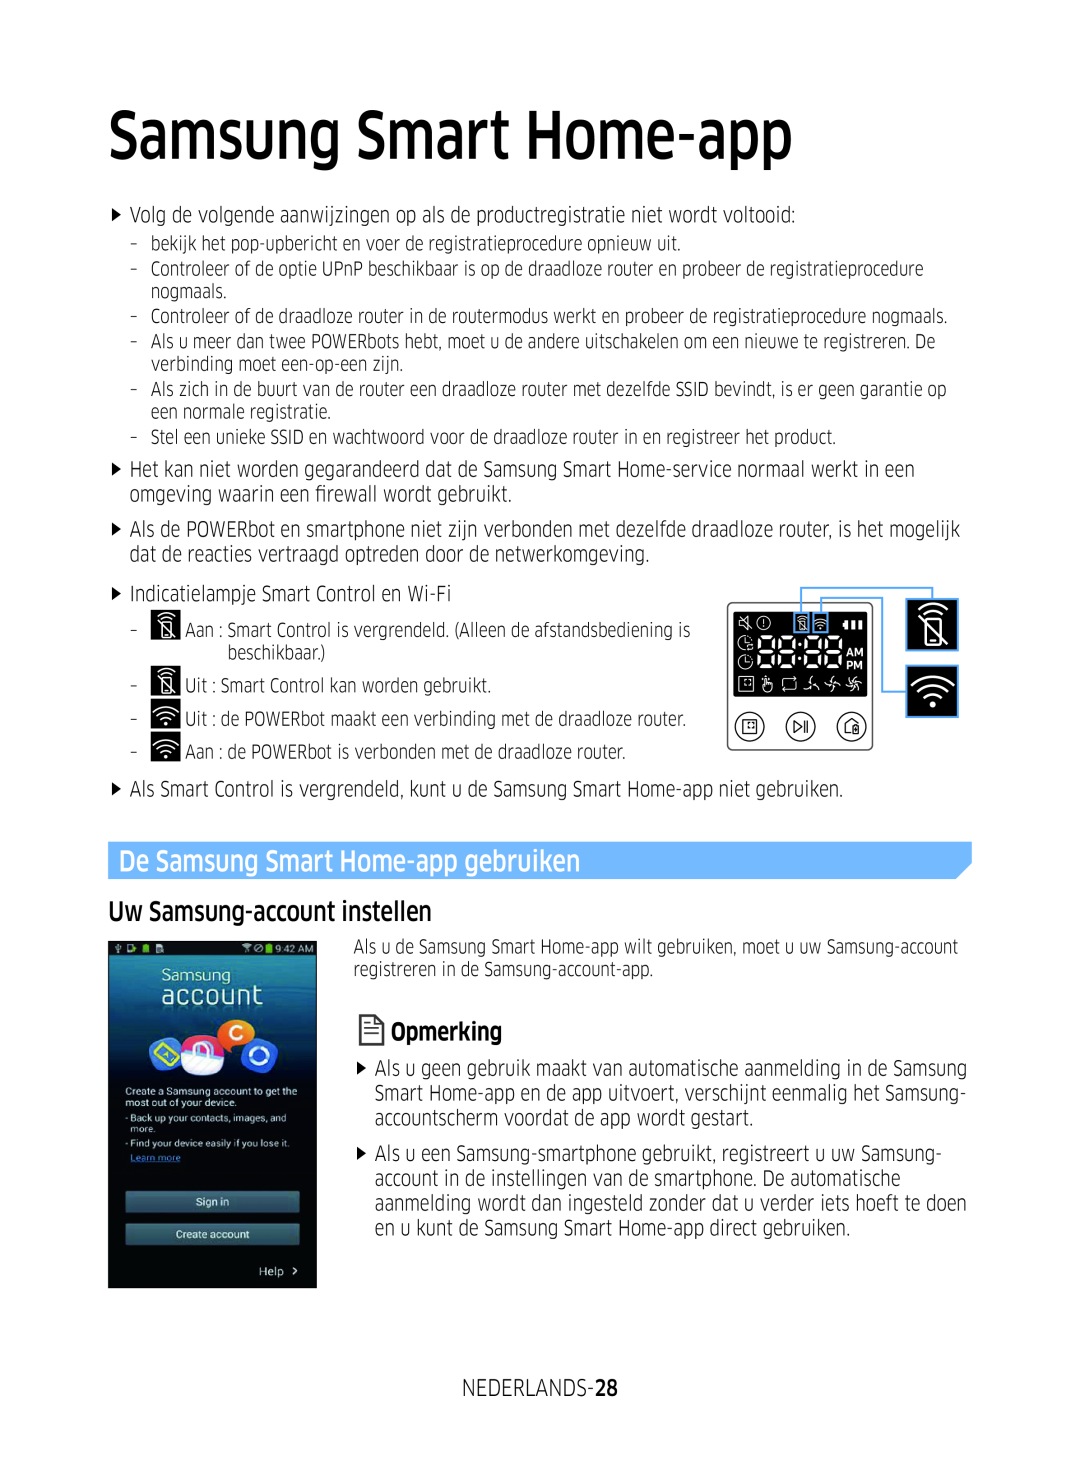 Samsung VR2GM7070WS/EG, VR1DM7020UH/EG manual De Samsung Smart Home-app gebruiken, Uw Samsung-account instellen, Opmerking 